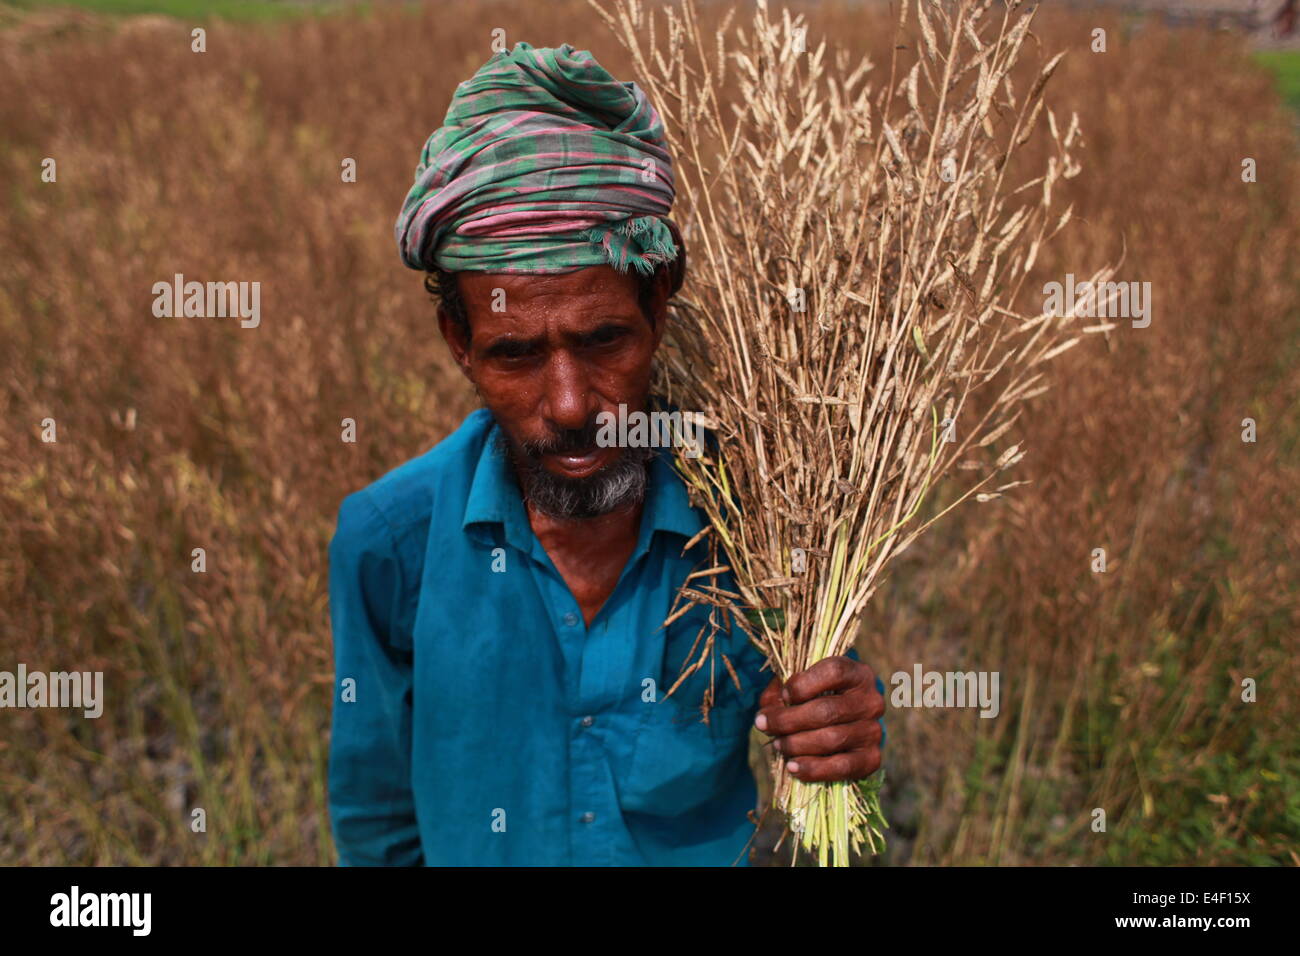 farmer  working in their cropland,farmer,Asia,Asian,Ethnicity,Bangladesh,Bangladeshi,Basket,Bengali,Boat,Color,Image,Deficiency, Stock Photo